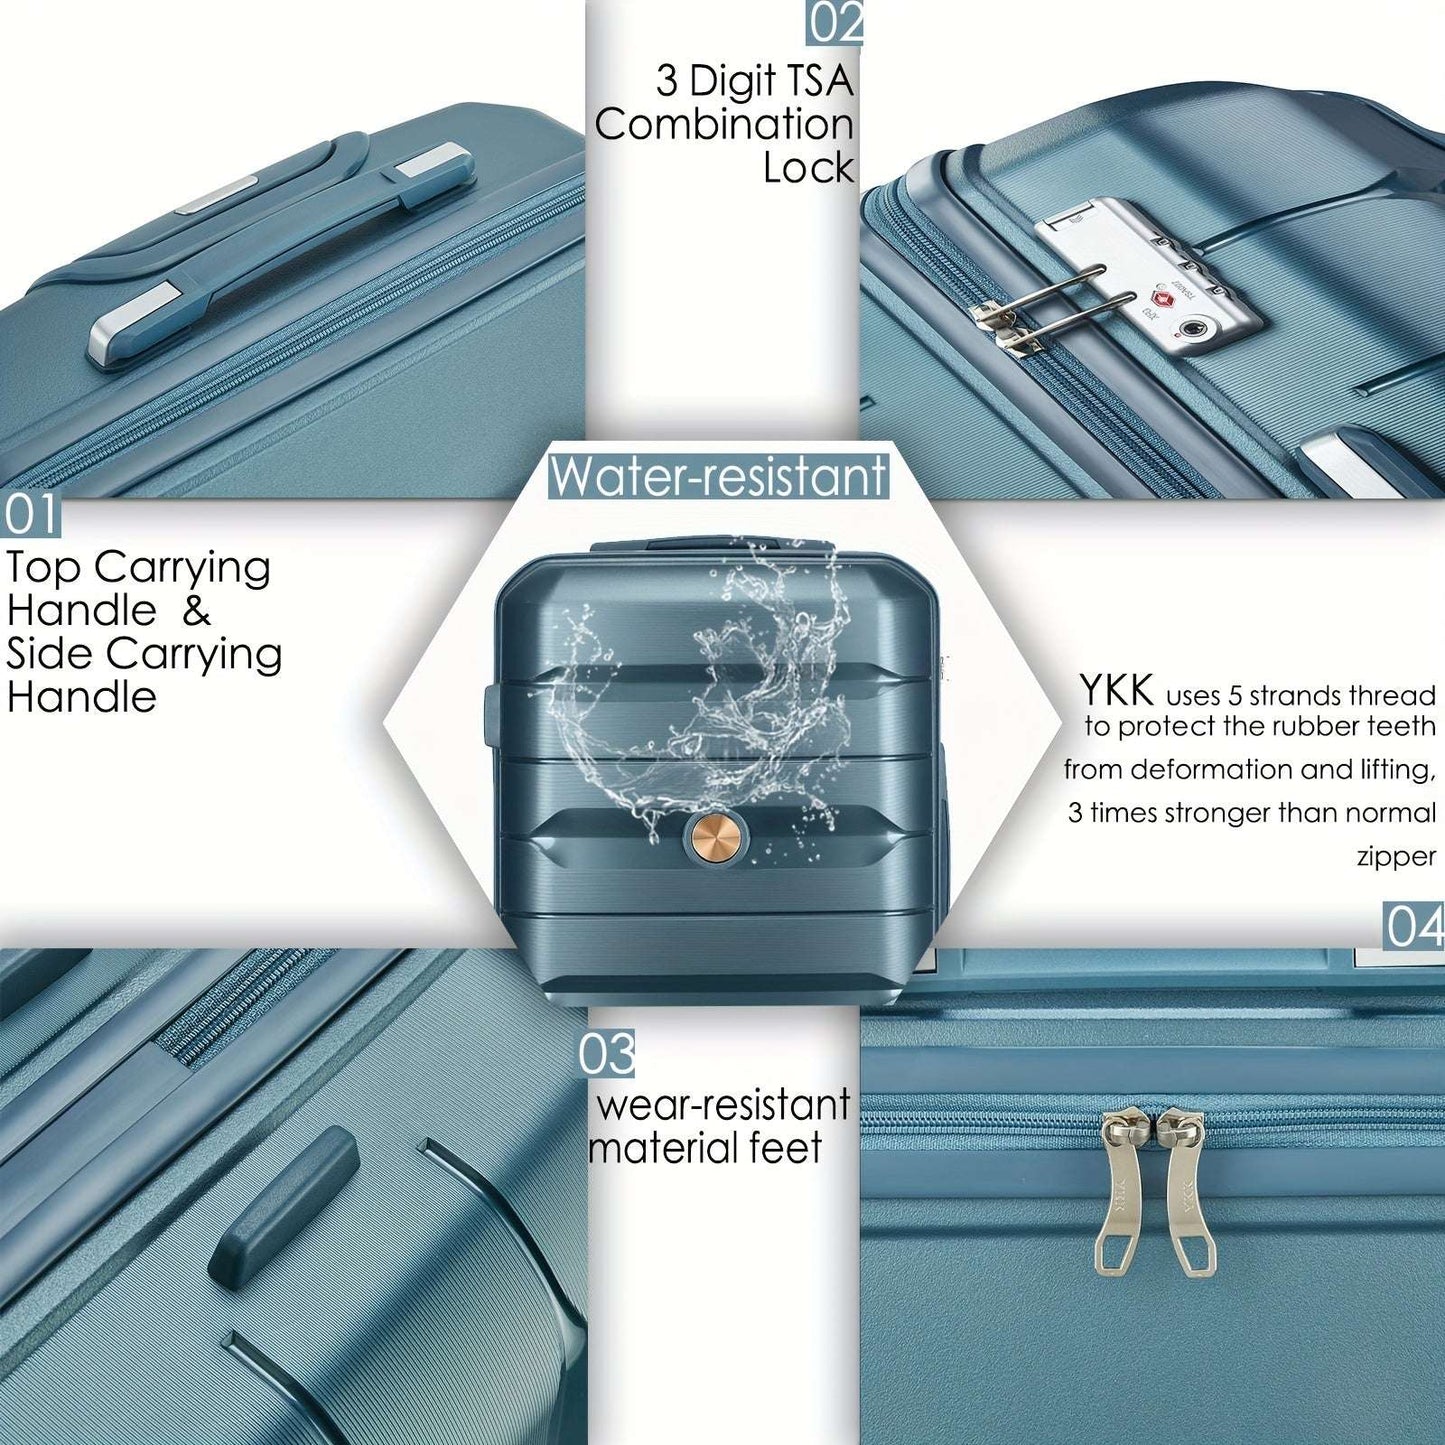 4pcs Somago Premium Spinner Luggage Set - Durable PP Hard Shell, Combination Lock, 6-Set Packing Bags 214 Luggage Somago OK•PhotoFineArt